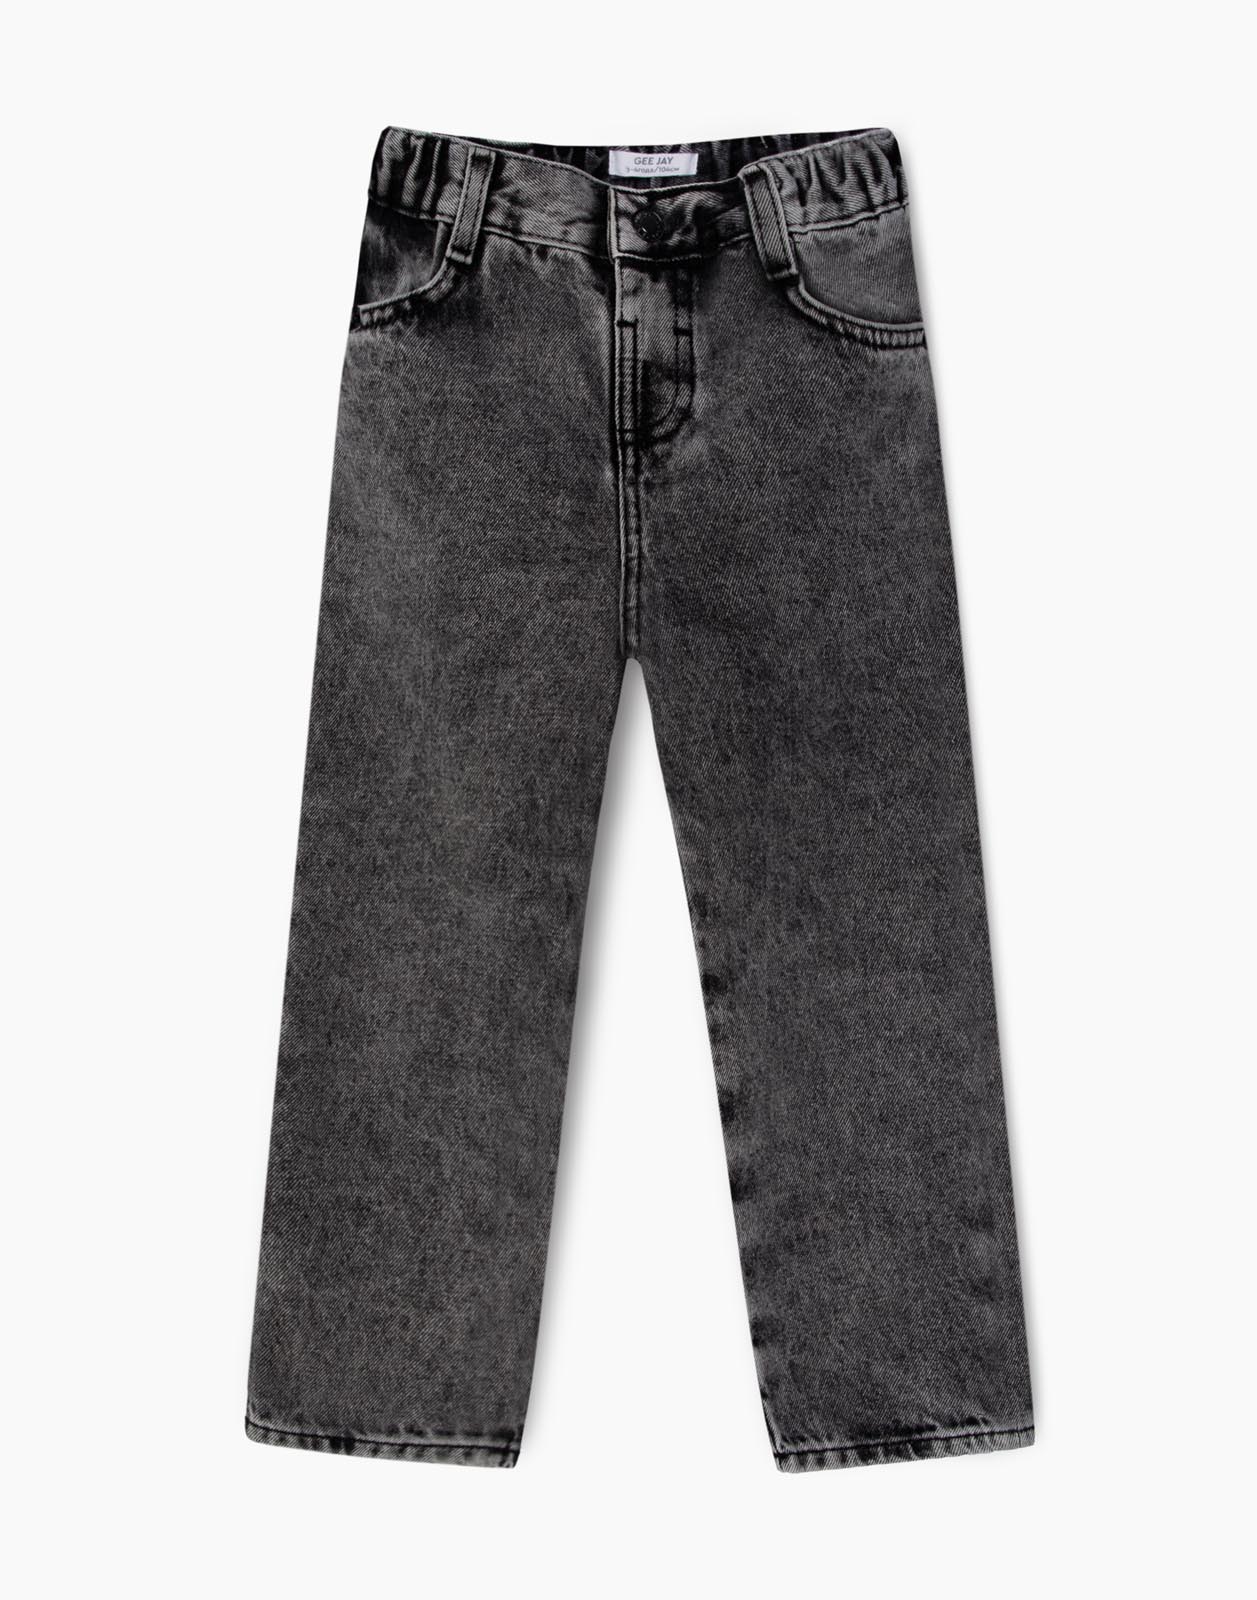 Джинсы Gloria Jeans BJN014177 серый/айс 3-4г/104 для мальчика